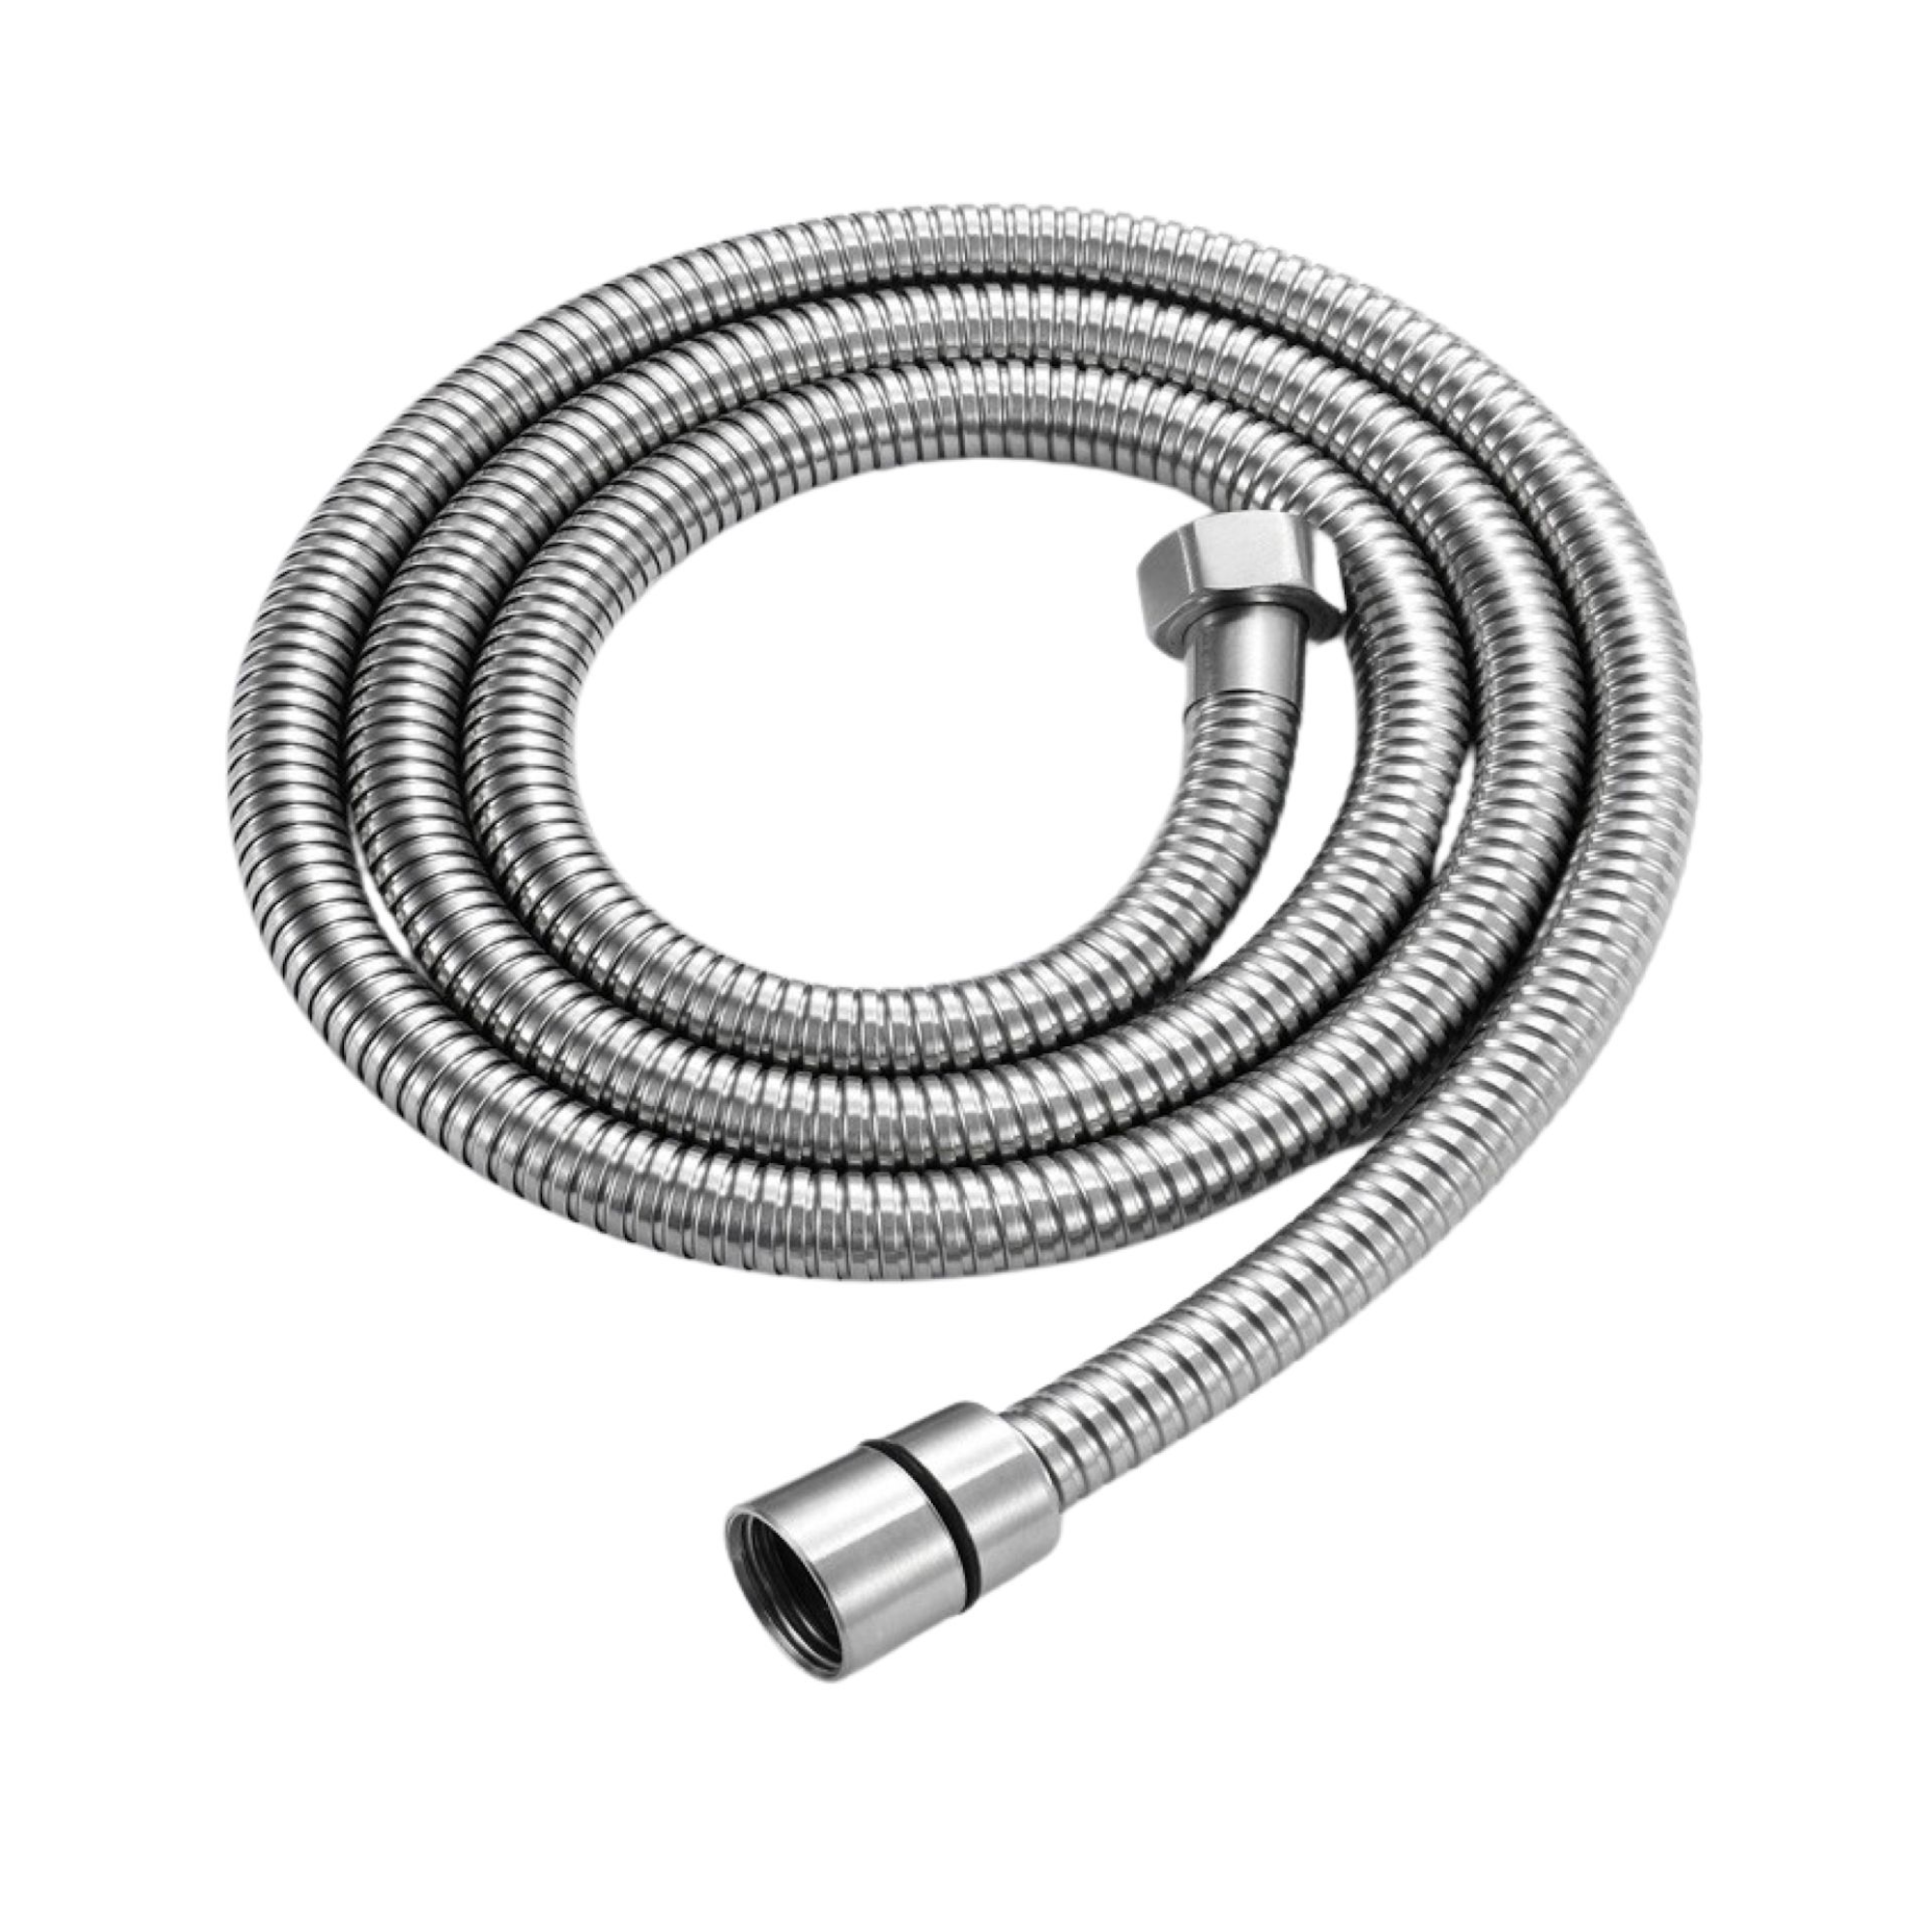 1.5m stainless steel shower hose - Brushed Nickel